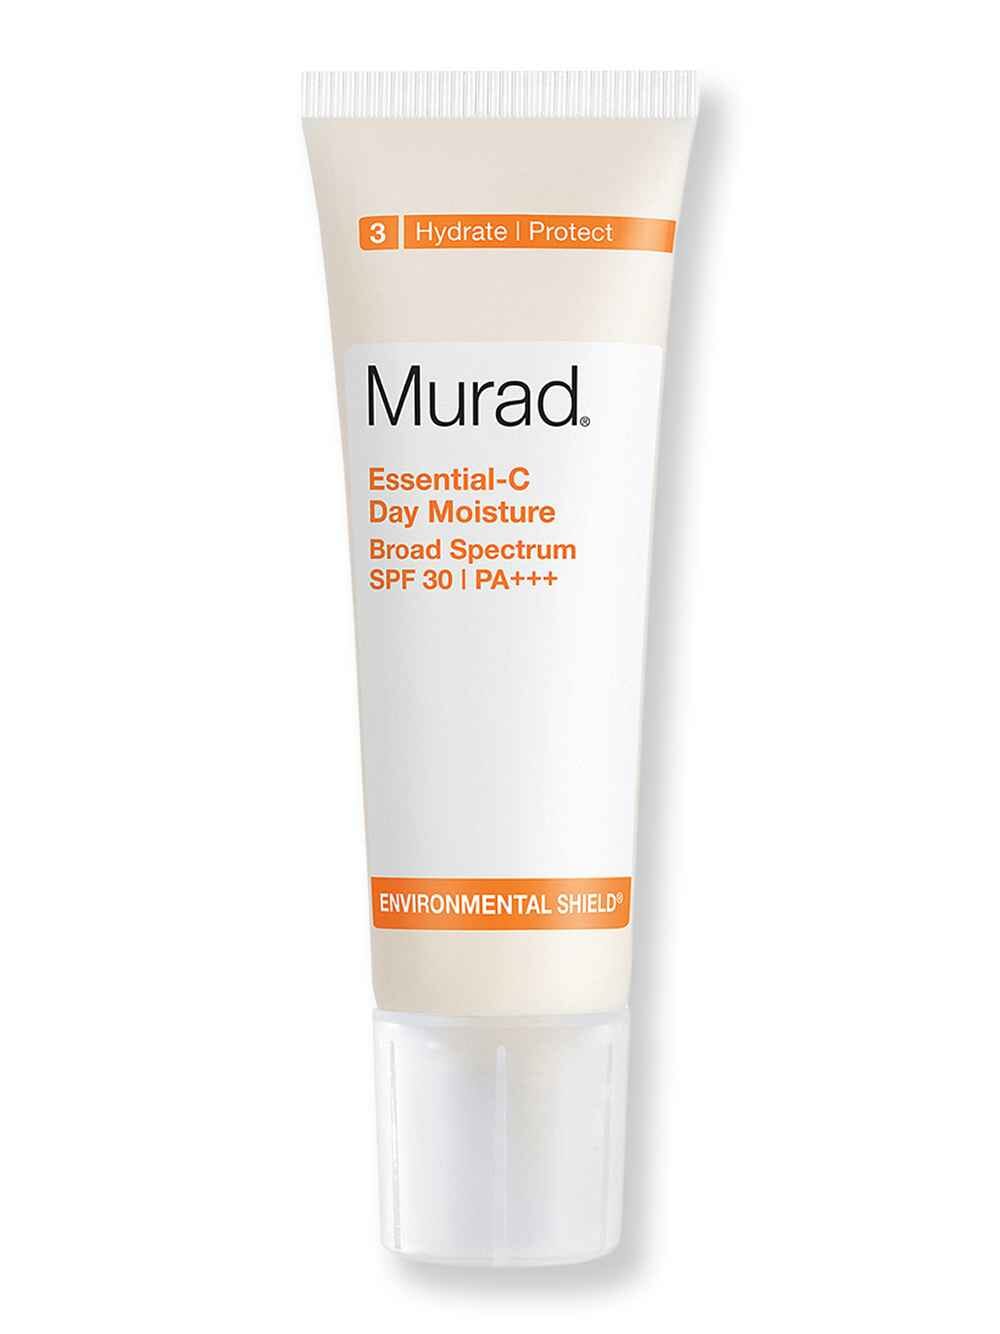 Murad Murad Essential-C Day Moisture SPF 30 PA+++ 1.7 oz Face Moisturizers 